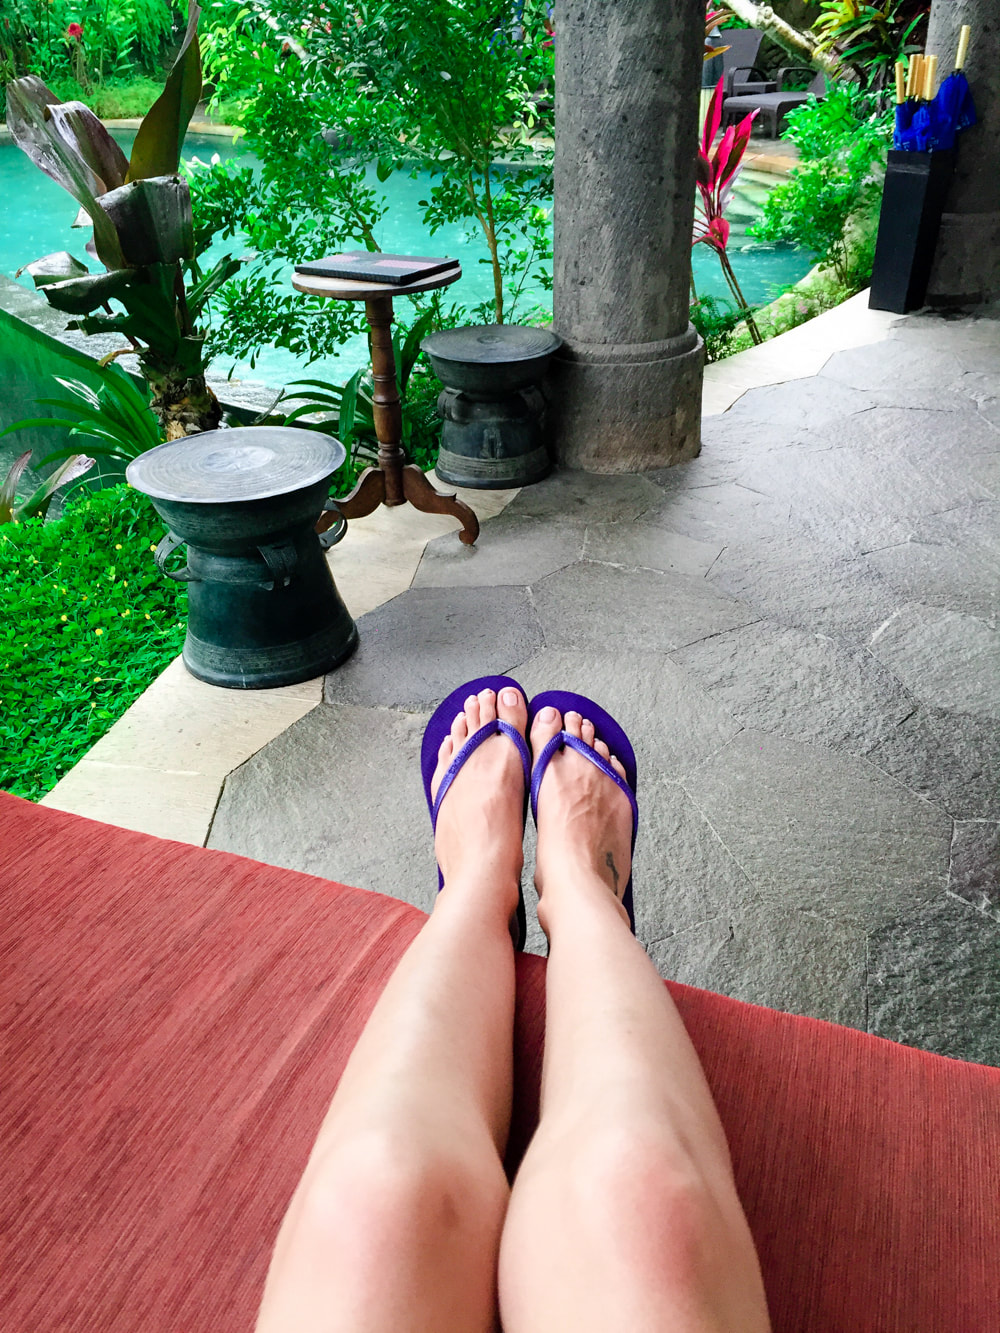  After an amazing foot massage at Rahda Spa. Dwaraka, the Royal Villas, Ubud, Bali, Indonesia.